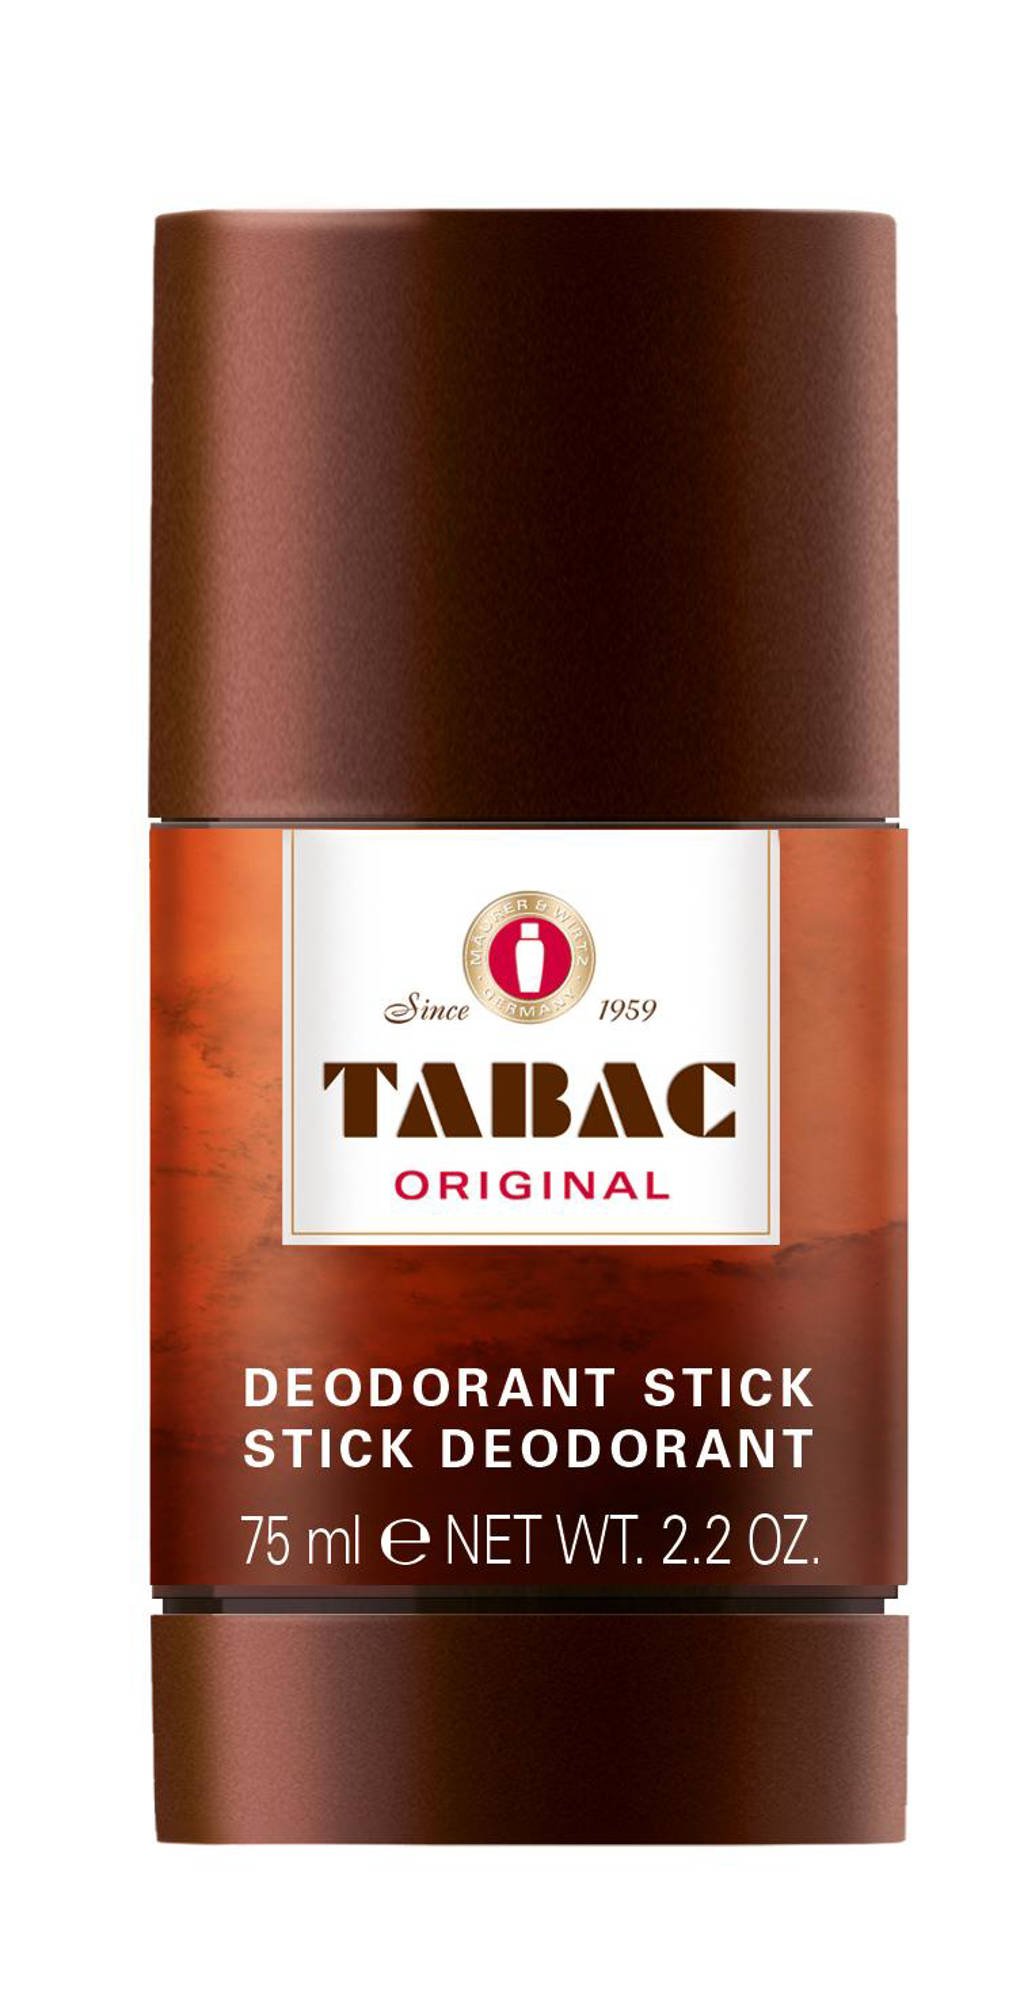 Tabac Original deodorant stick - 75 ml